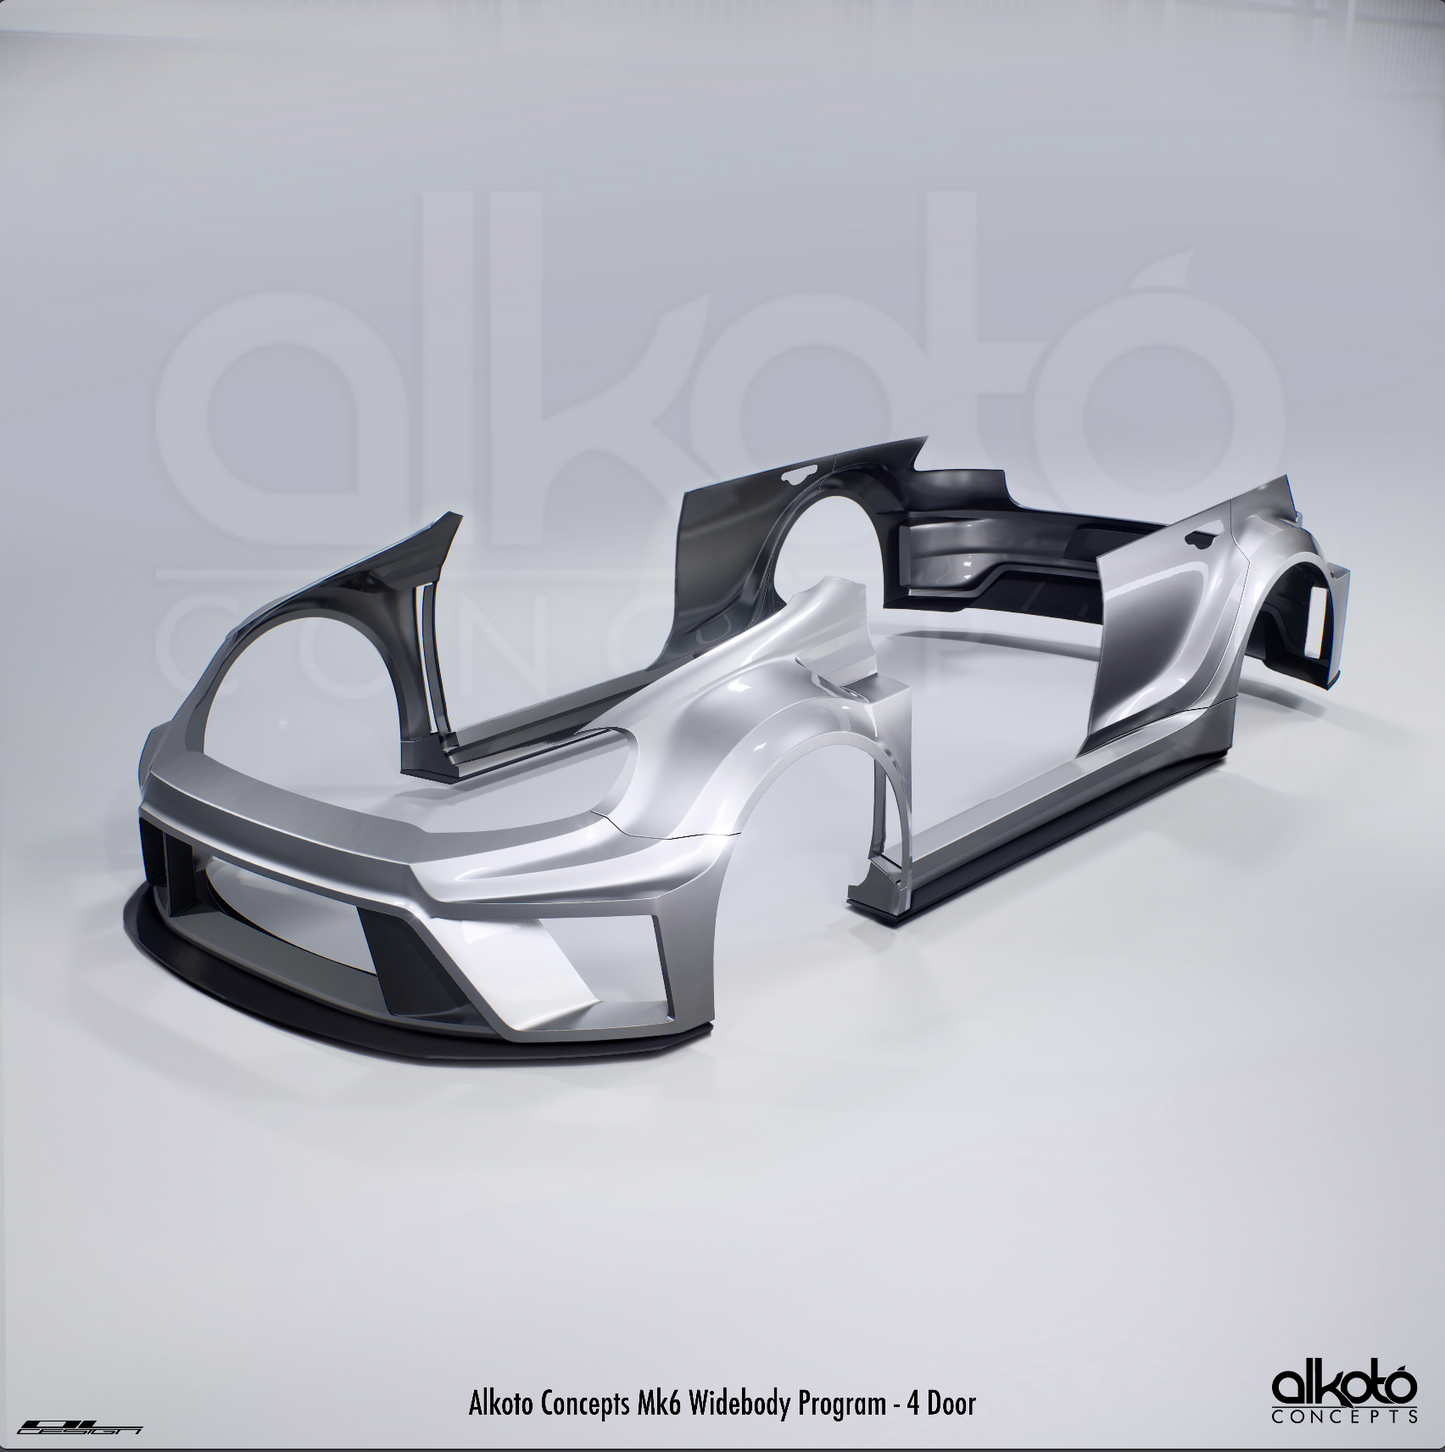 Alkoto Concepts VW MK6 Widebody Program